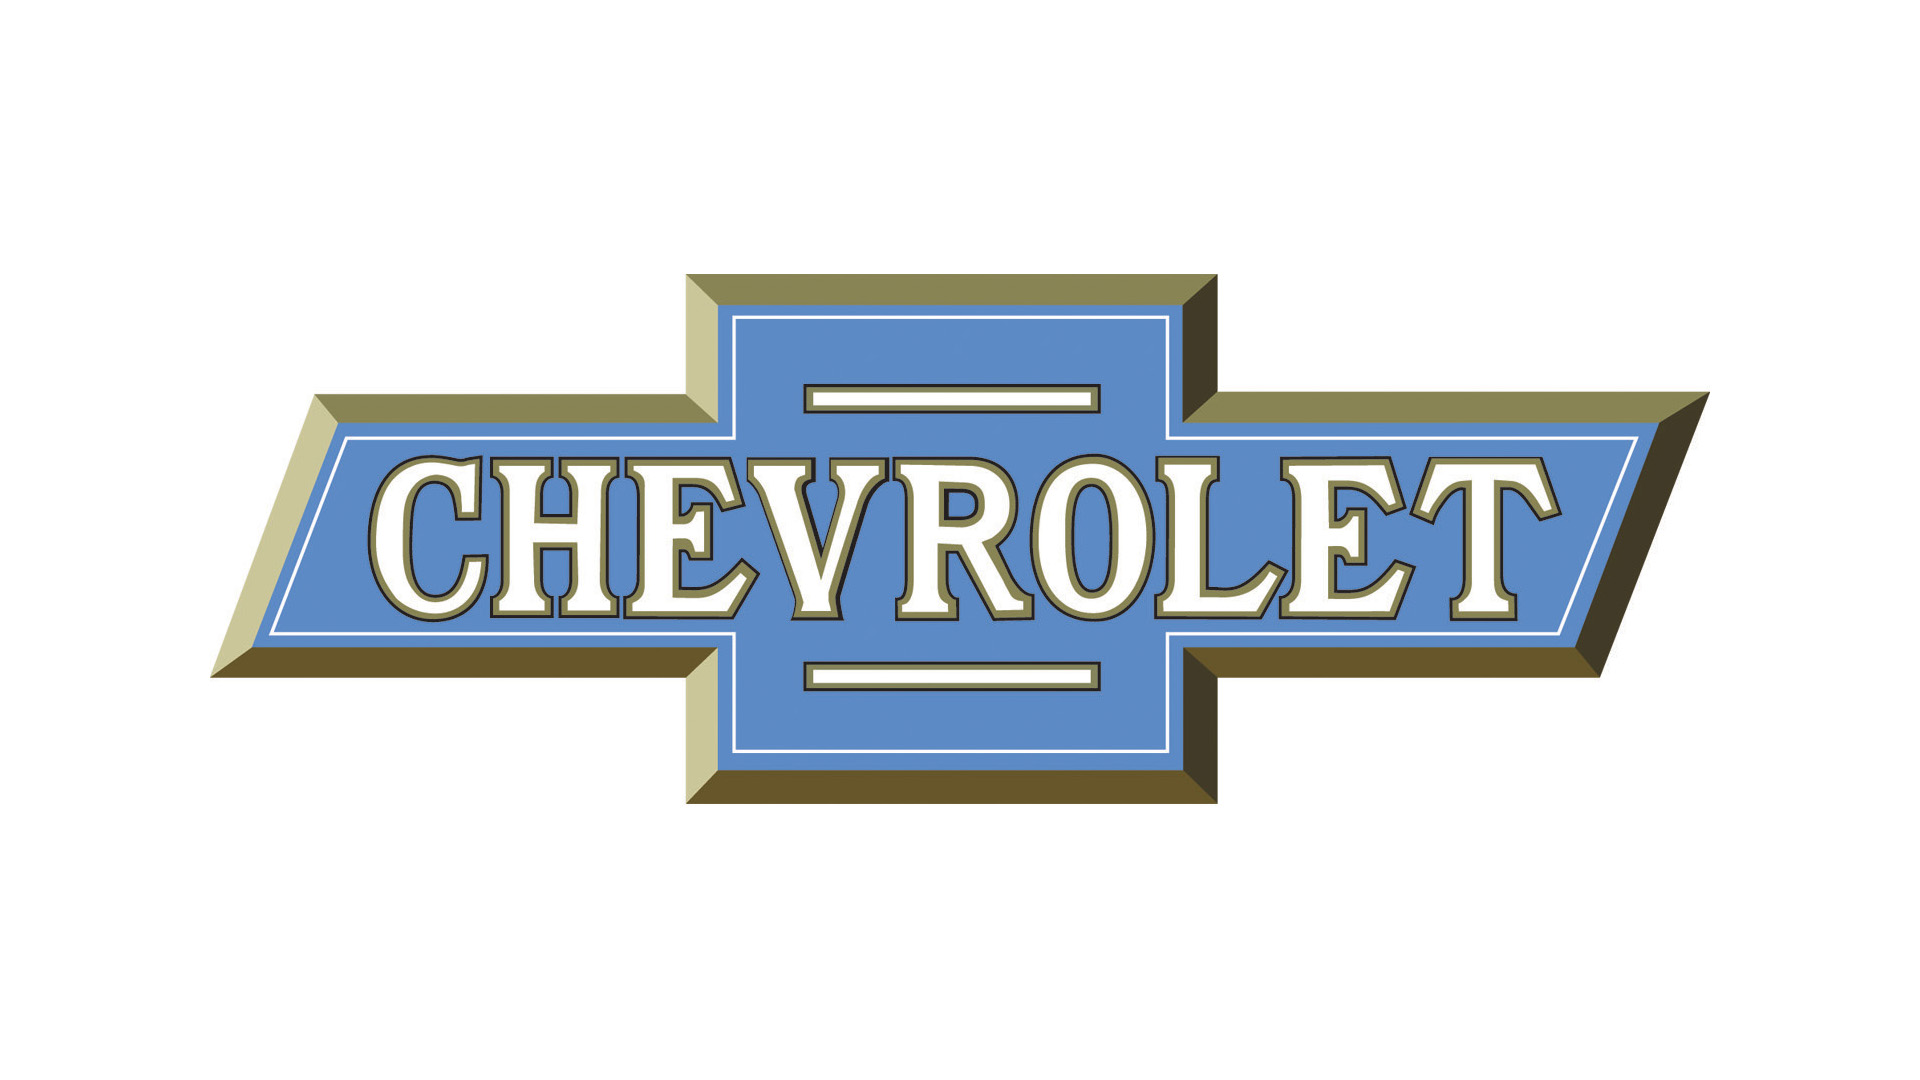 chevy logo Chevrolet logo hd meaning information jpg